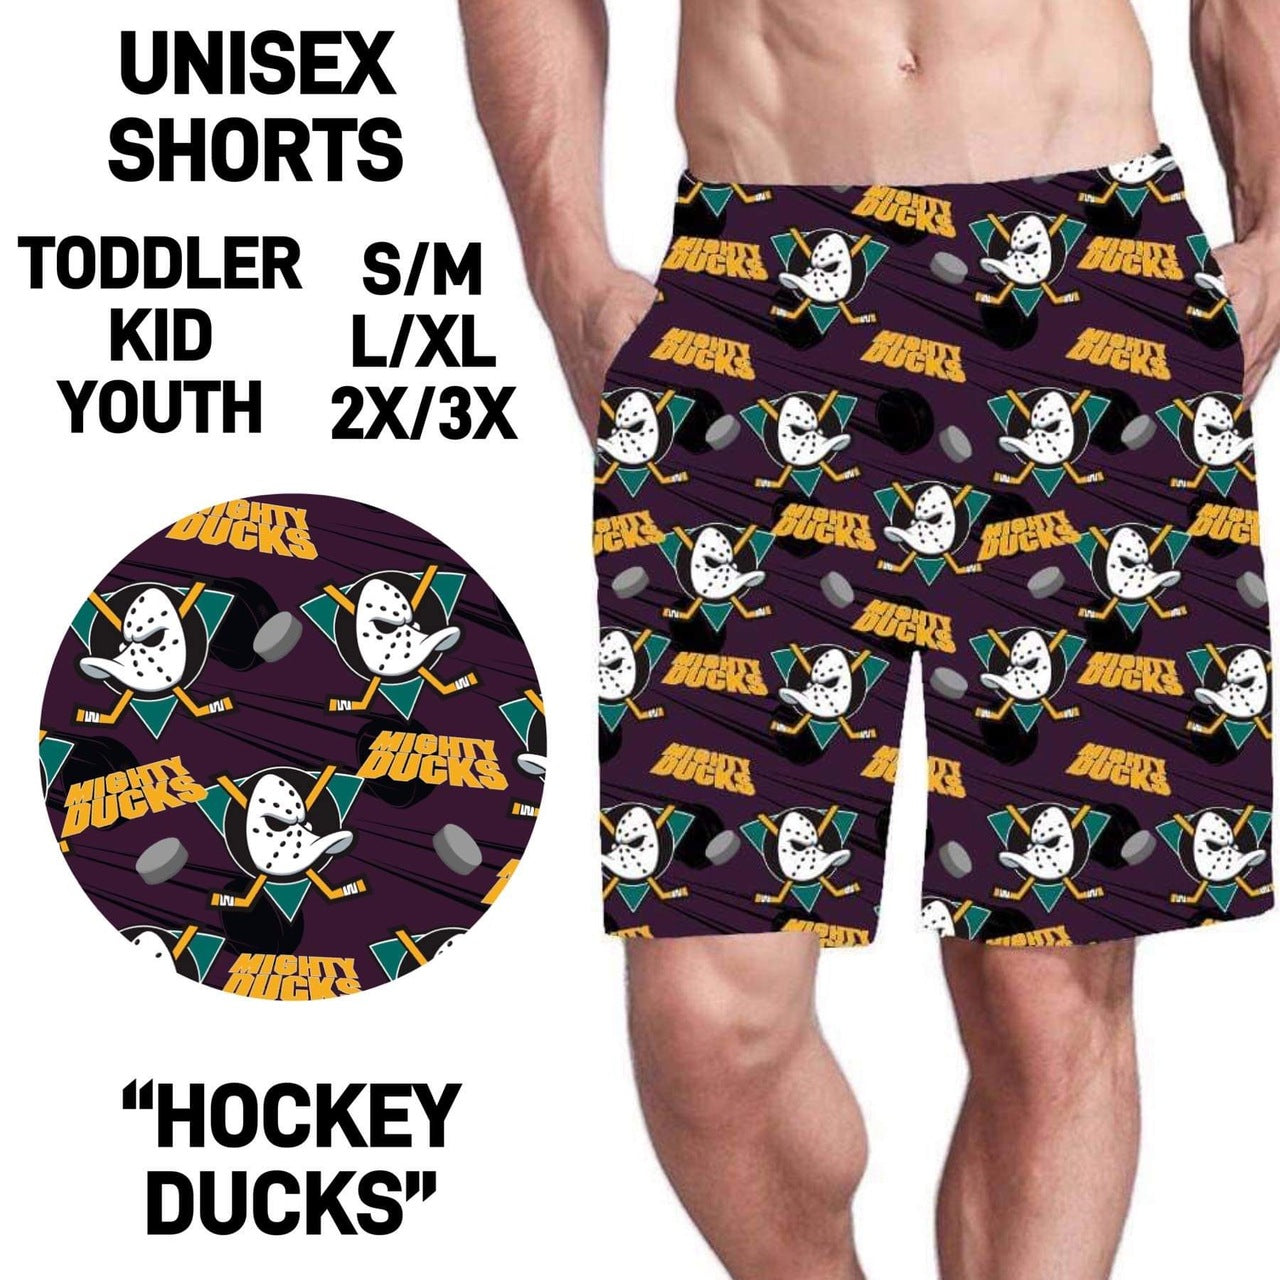 RTS - Hockey Ducks Unisex Shorts